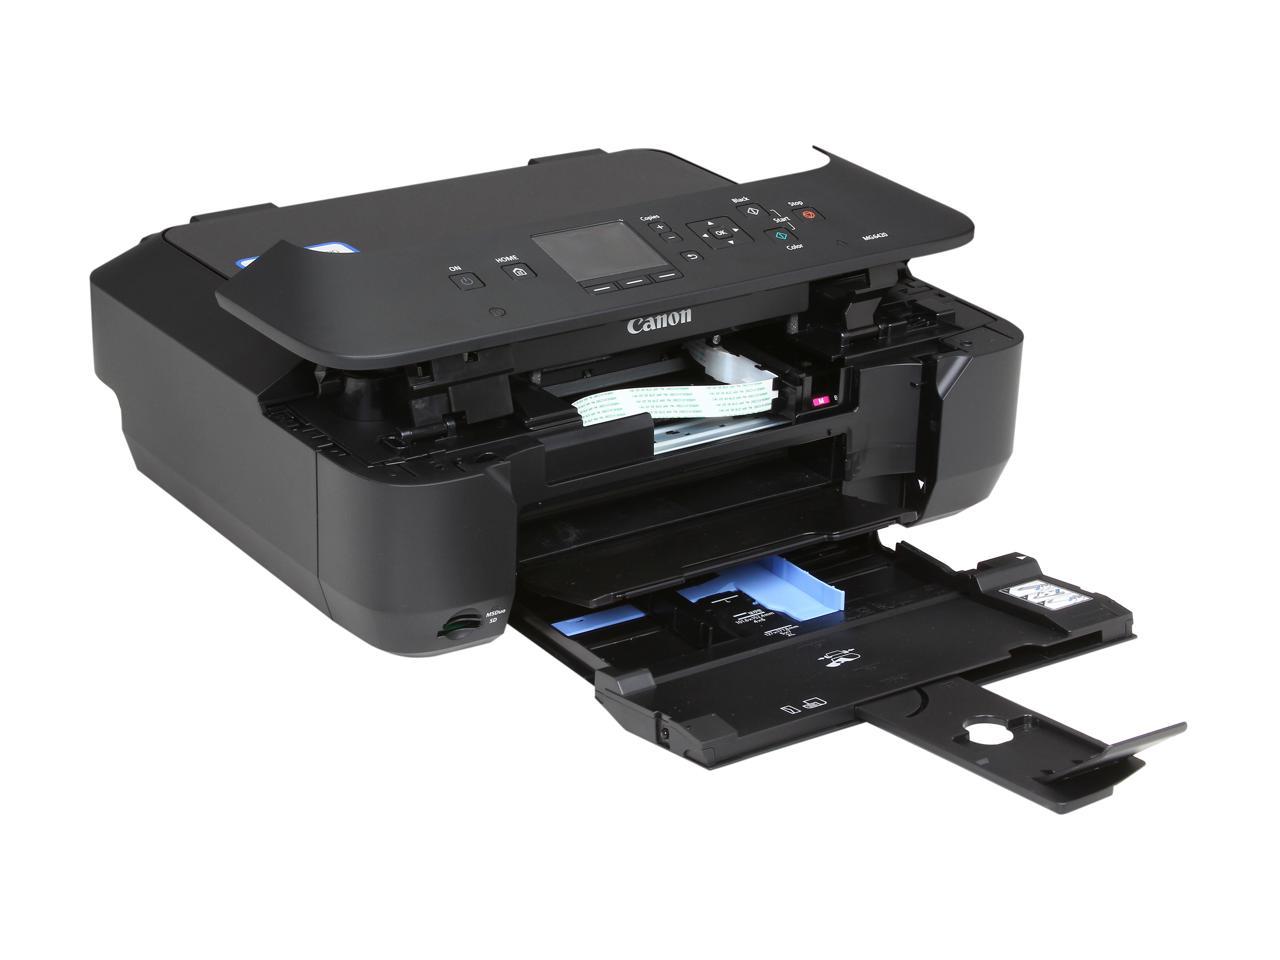 Canon Pixma Mg6420 Wireless Inkjet Photo All In One Printer Black 8122